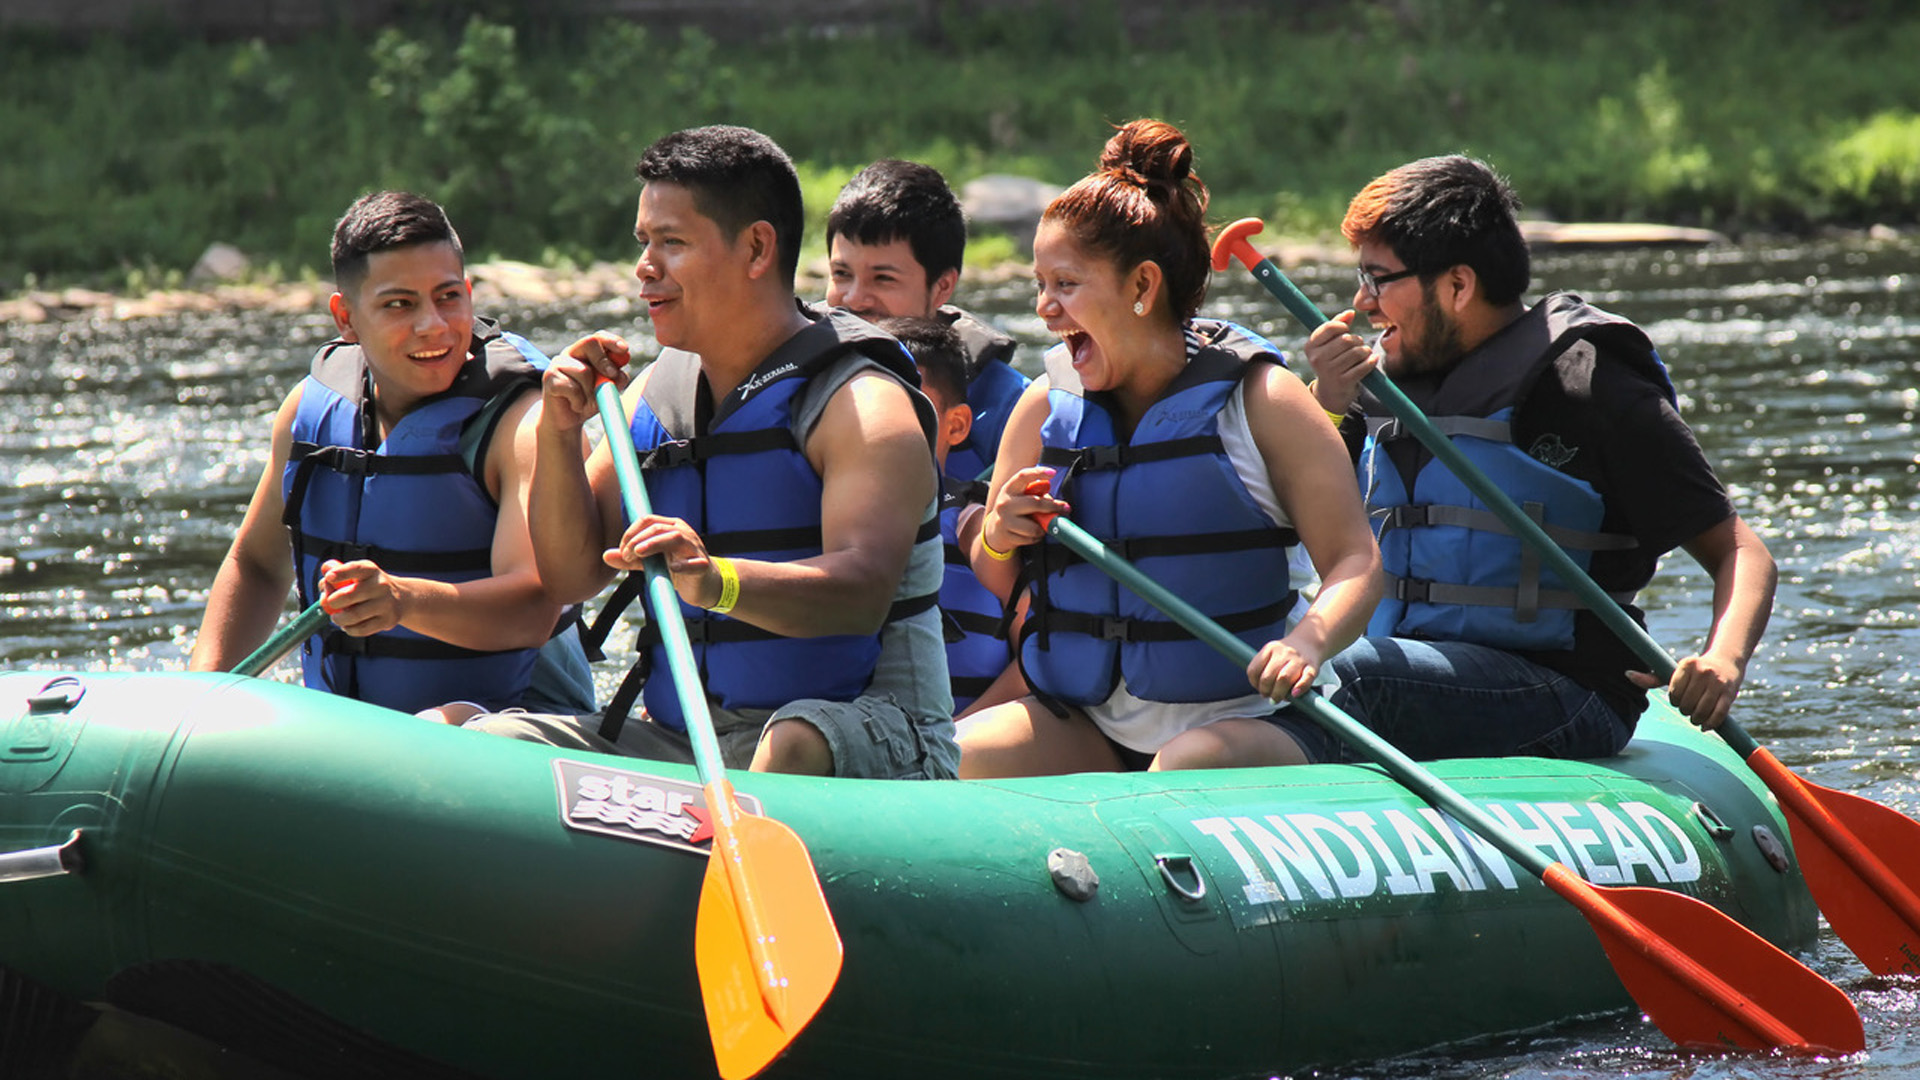 group of rafters having fun on the water Indian Head Canoeing Rafting Kayaking Tubing Delaware River